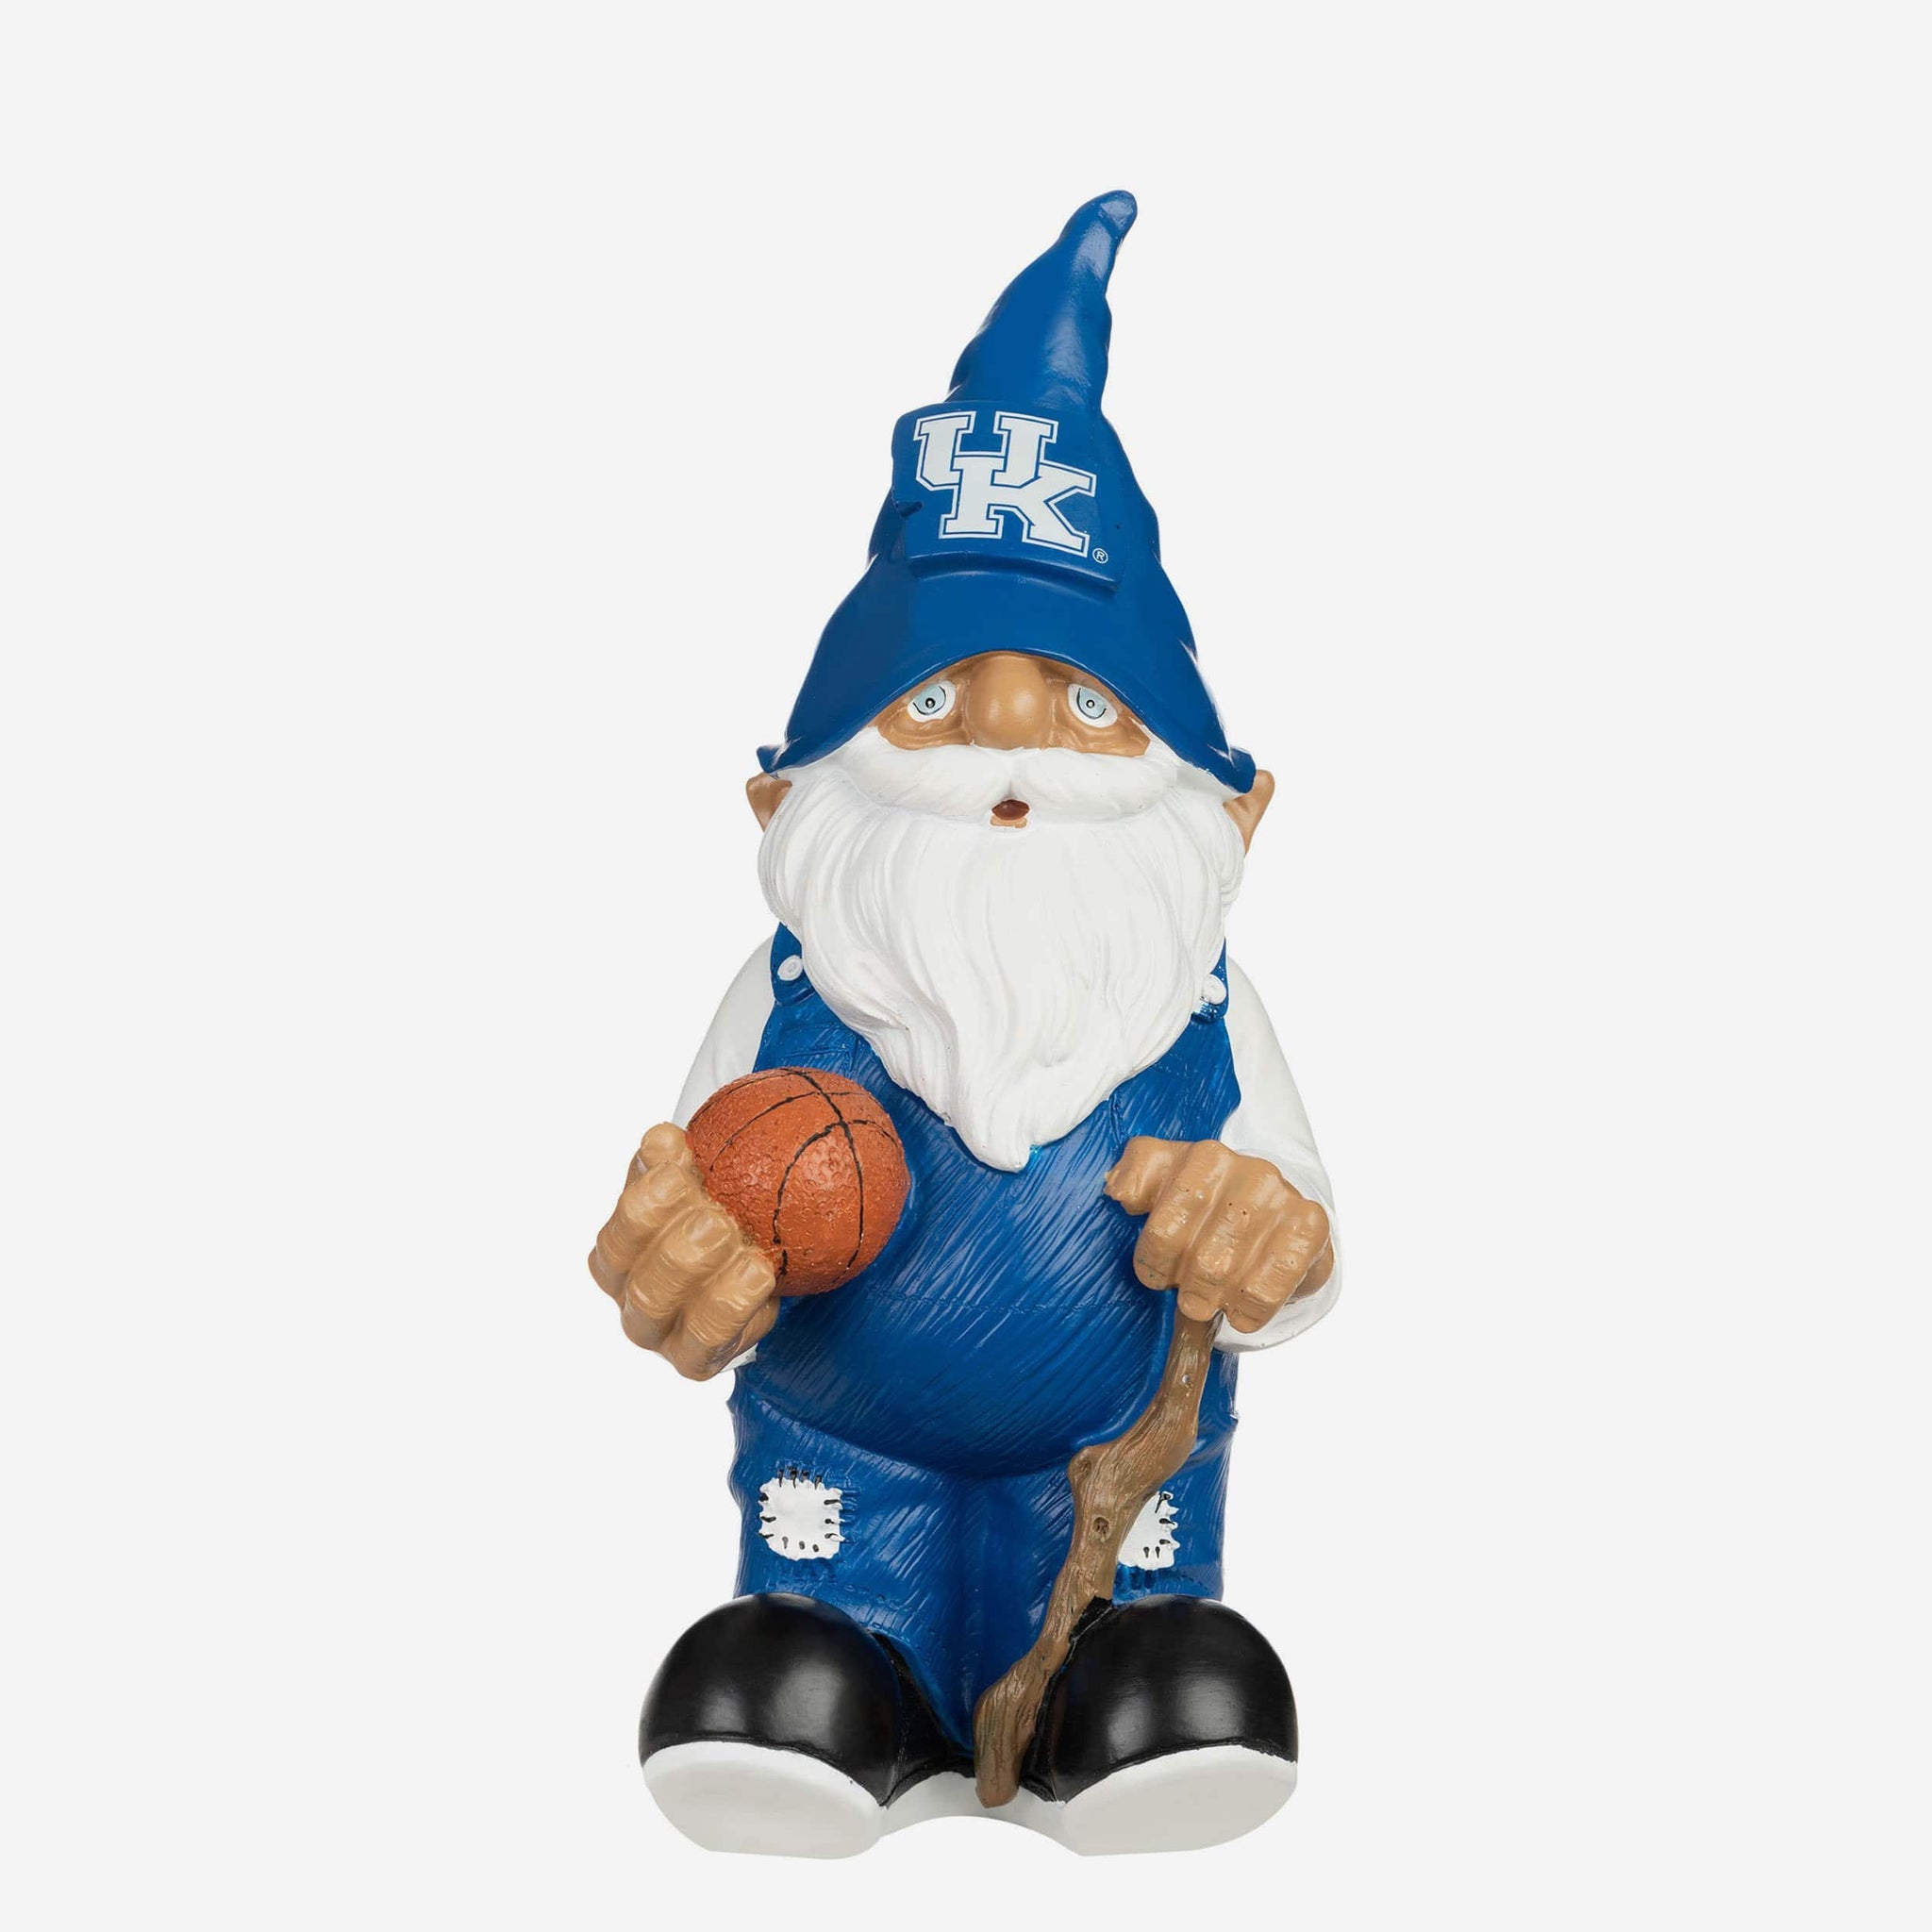 Kentucky Wildcats Team Gnome - image 1 of 4